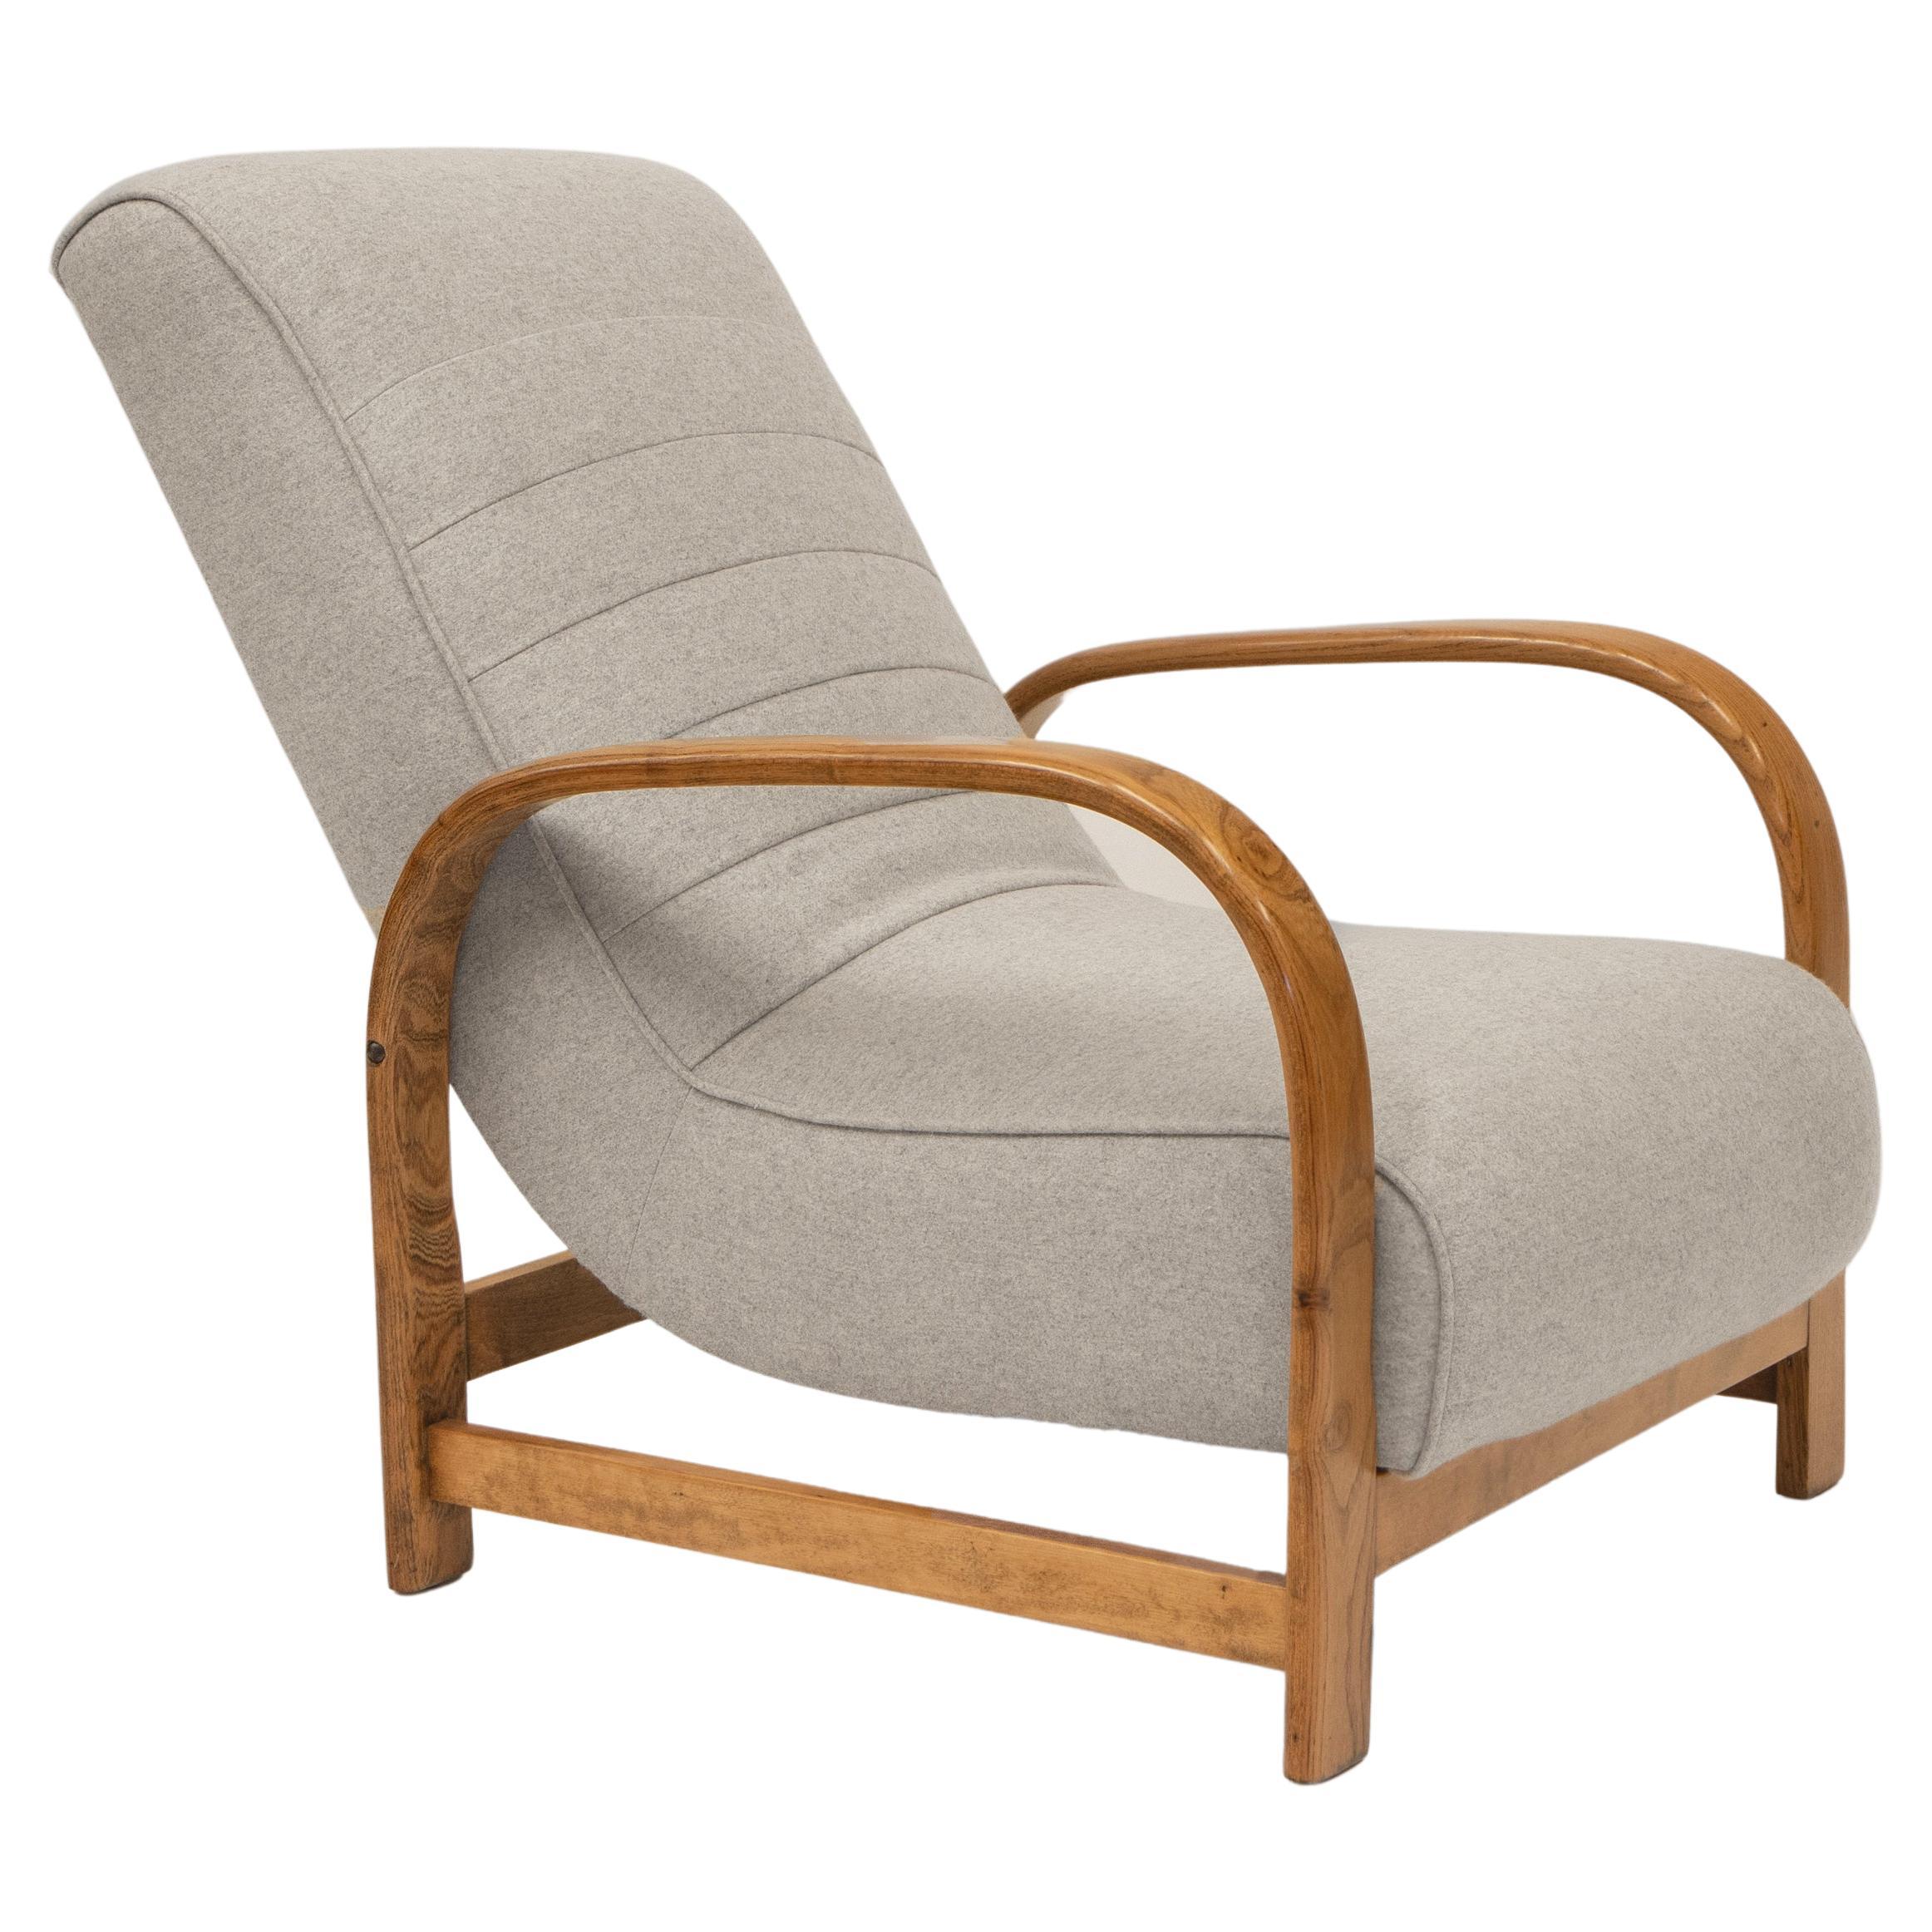 English Art Deco Lounge Chair Armchair Bute Light Grey Wool Fabric